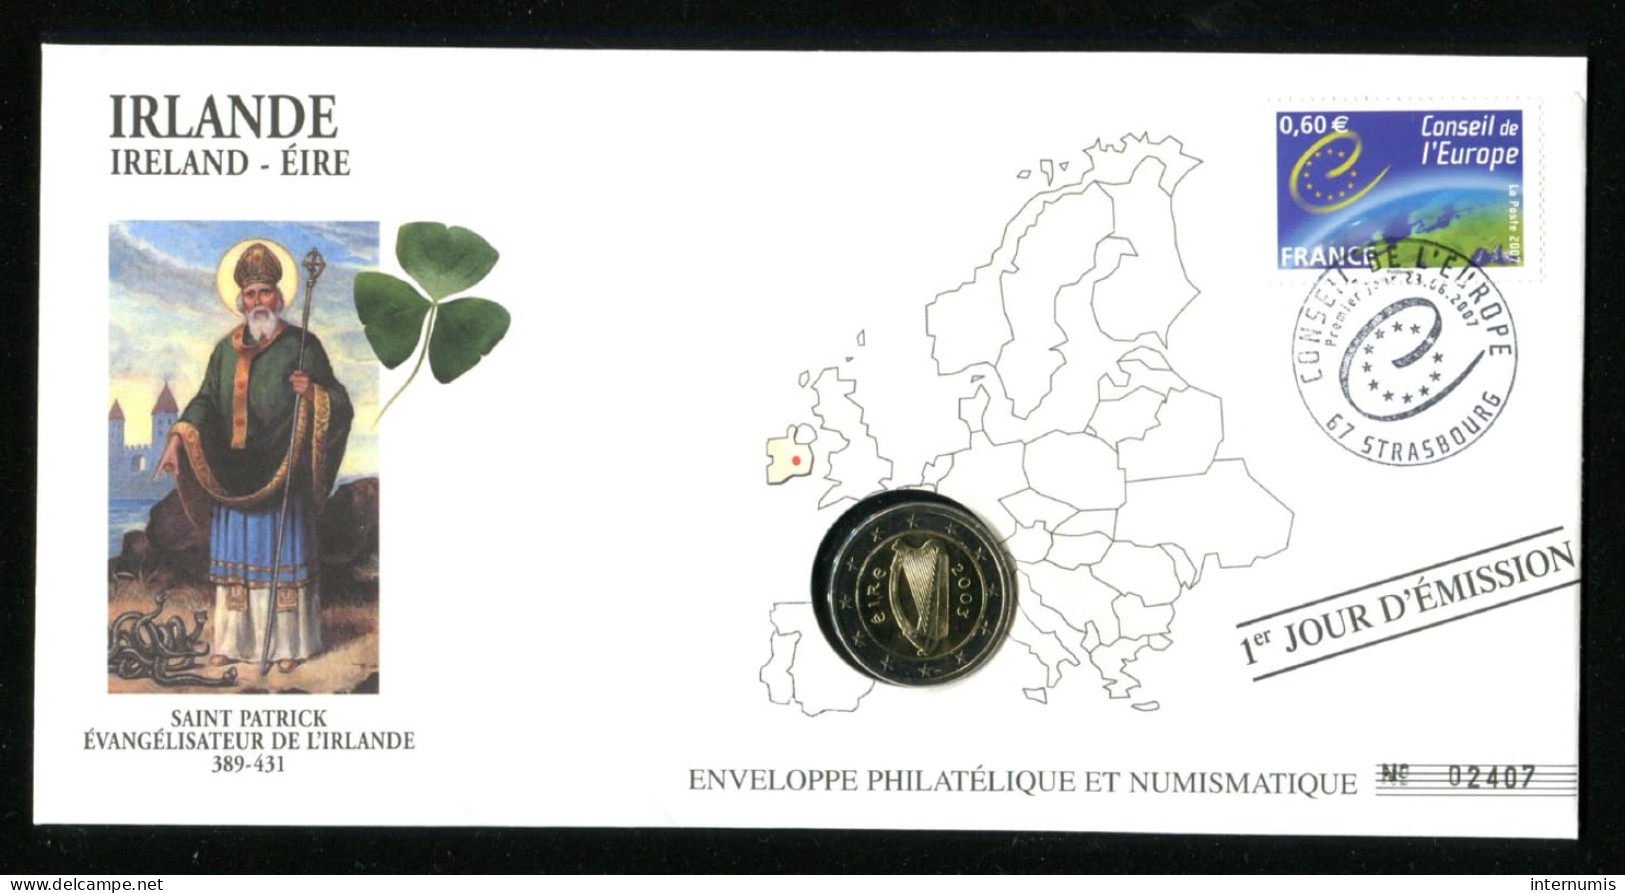 Irlande / Ireland, 2 Euro, 2003, 1er Jour D'Emission (23-06-2007) - Enveloppe Philatélique Et Numismatique - Ierland